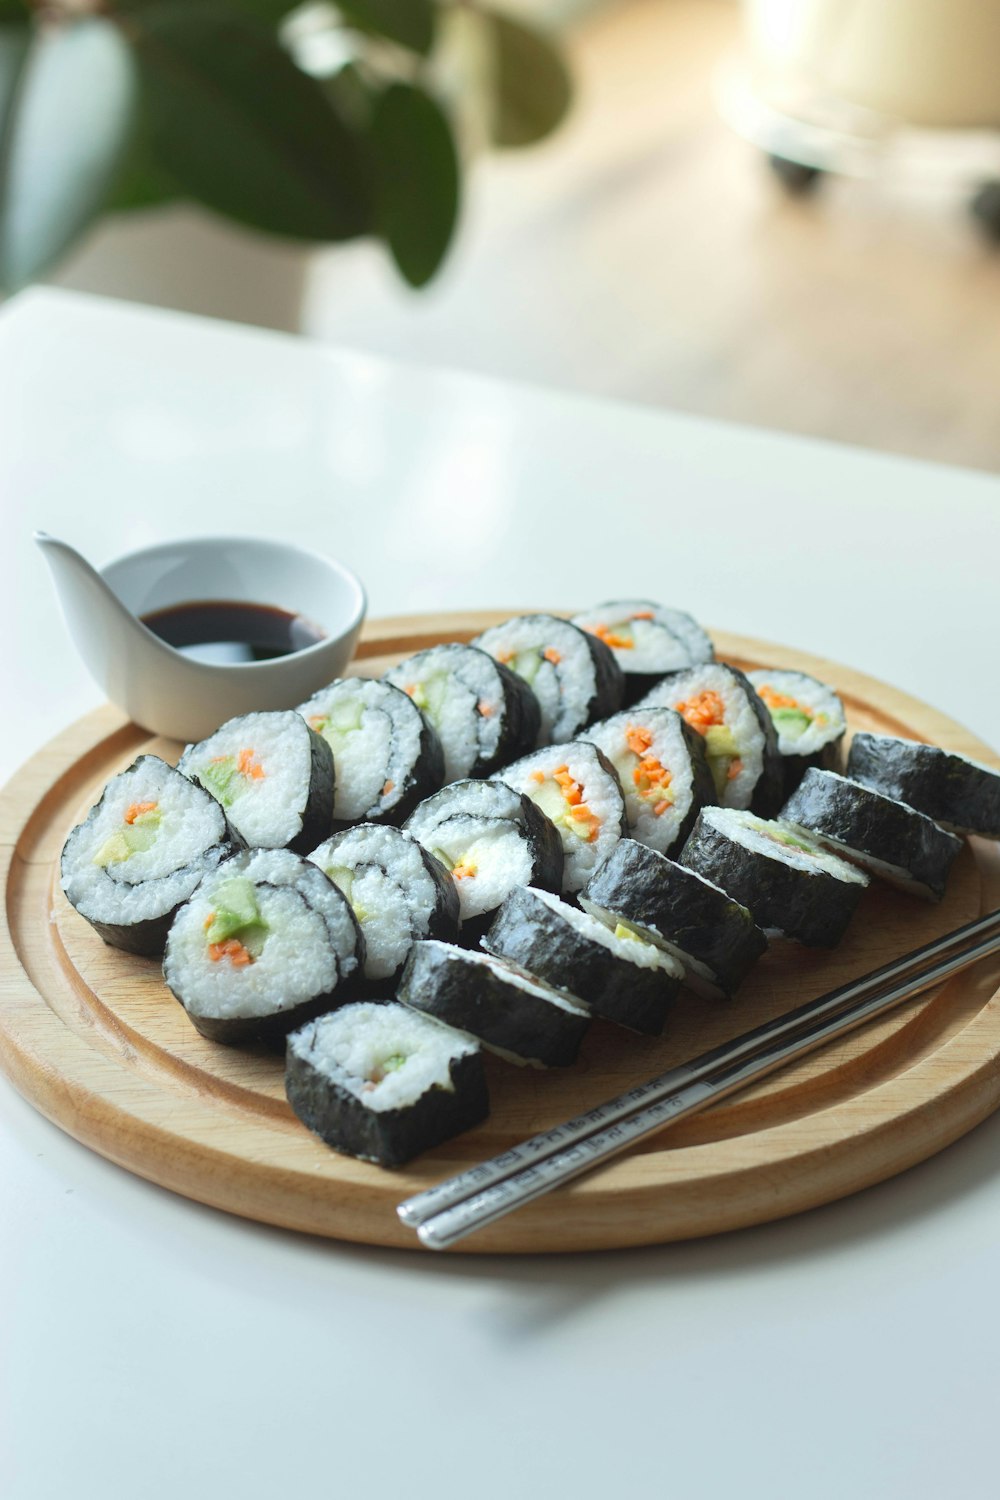 Sushi auf dem Teller